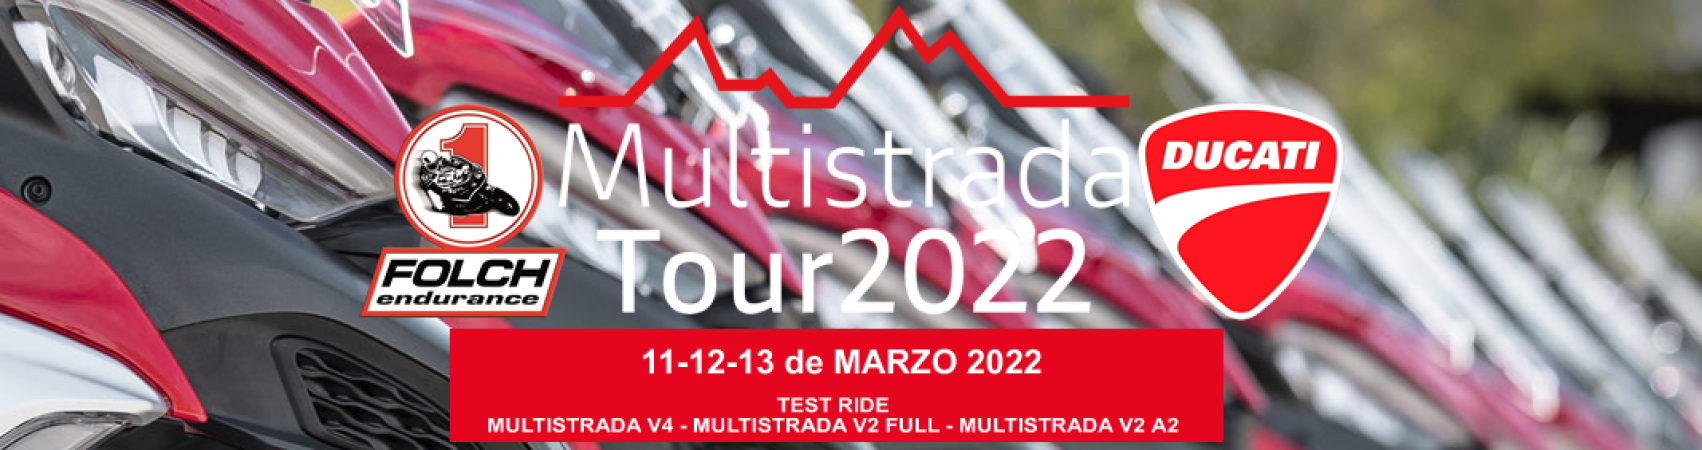 Multistrada Tour 2022